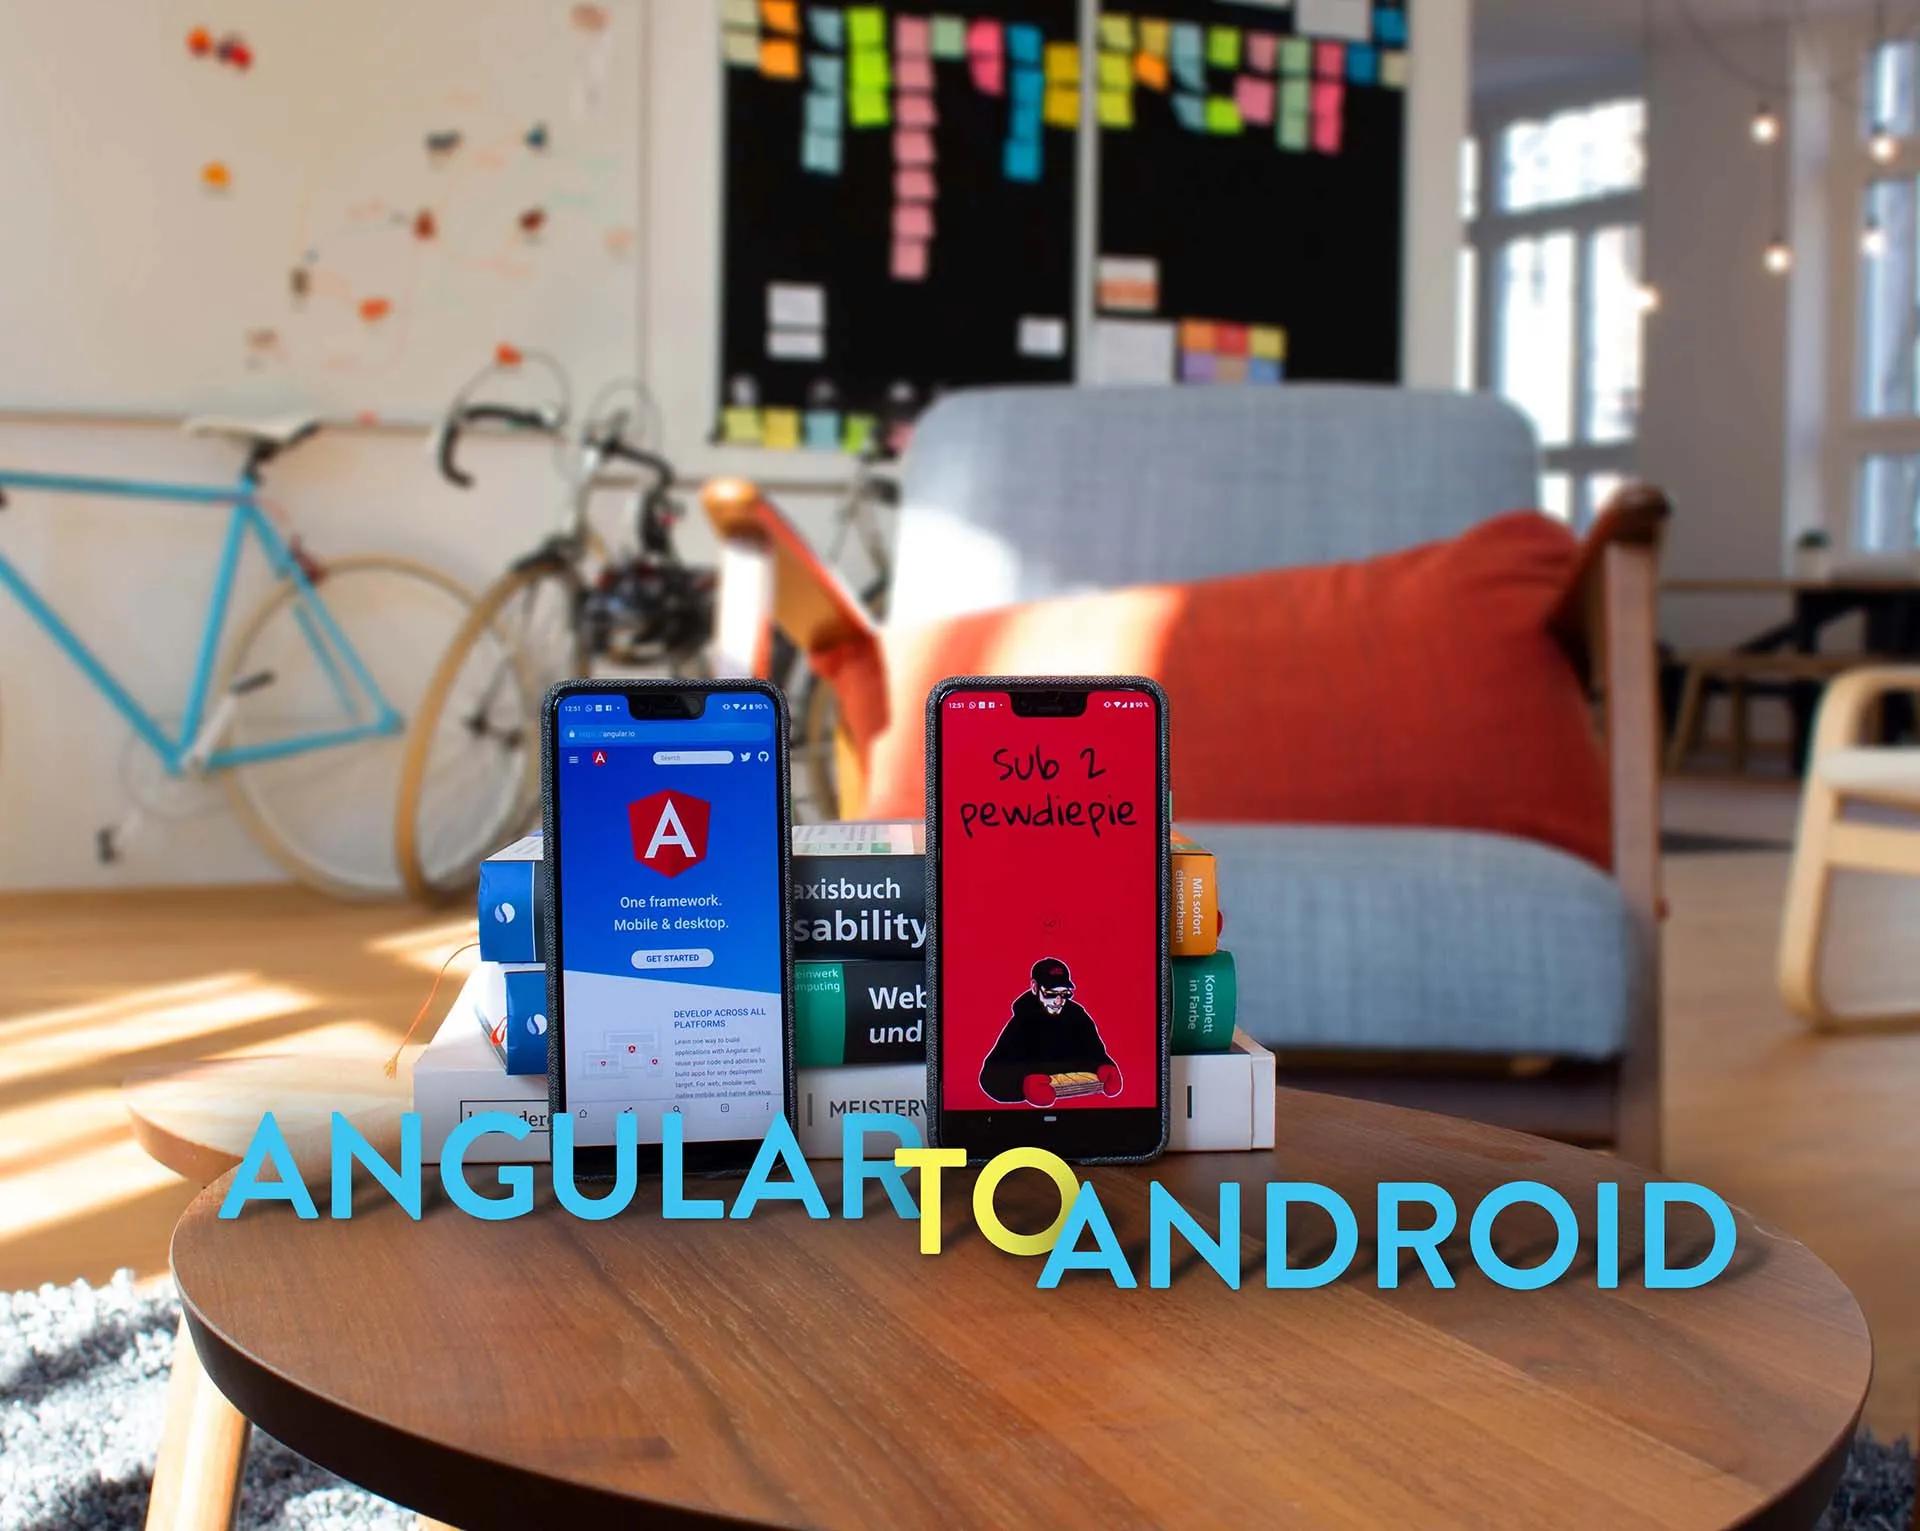 Angular to Android